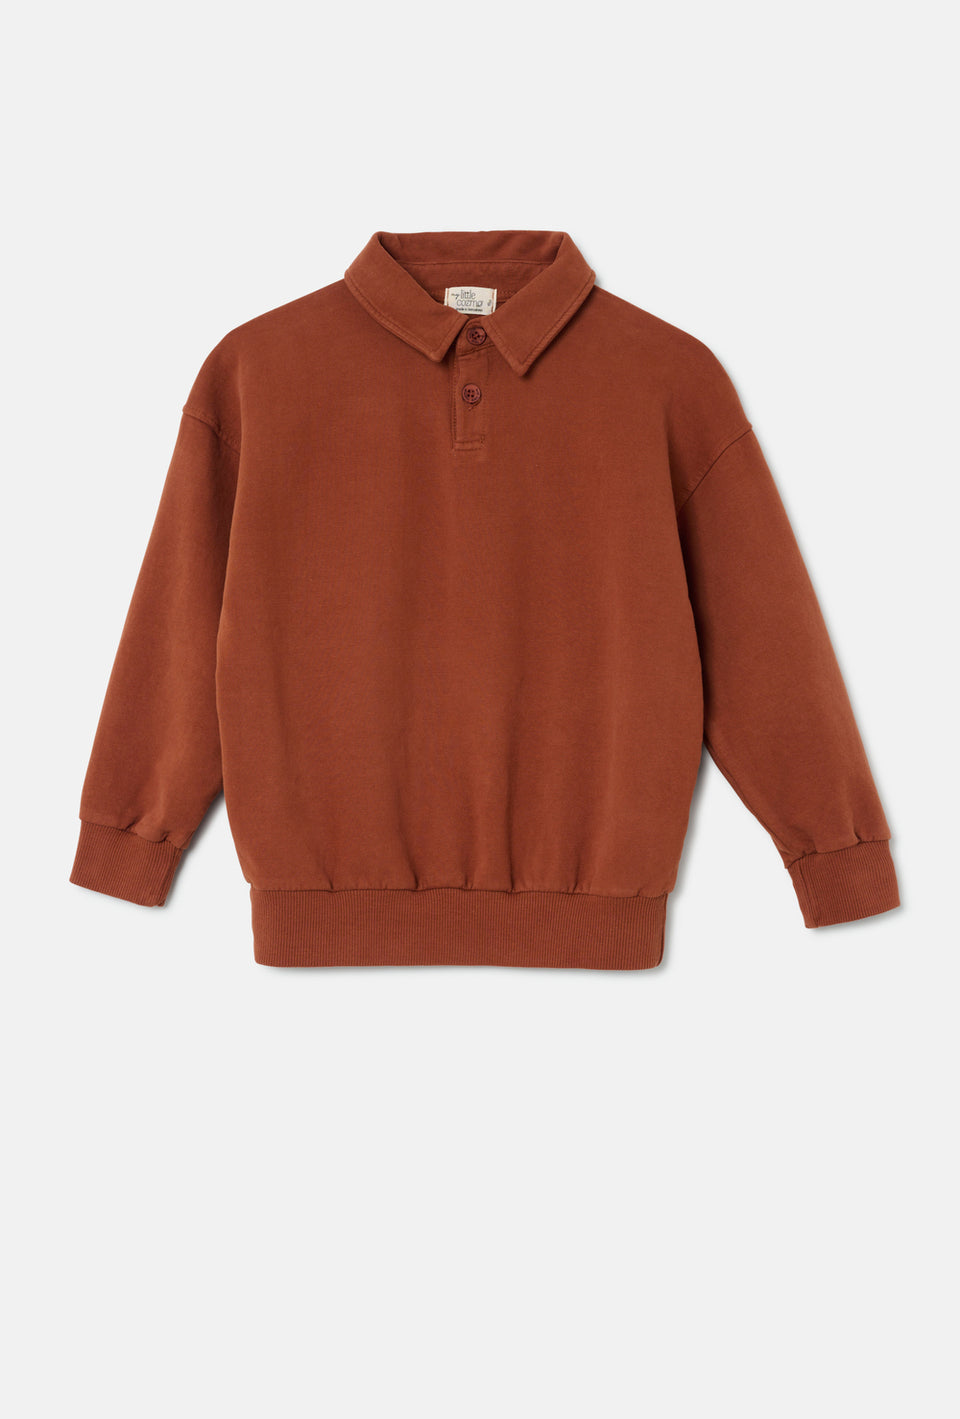 My Little Cozmo Soft Touch Sweatshirt - Brown